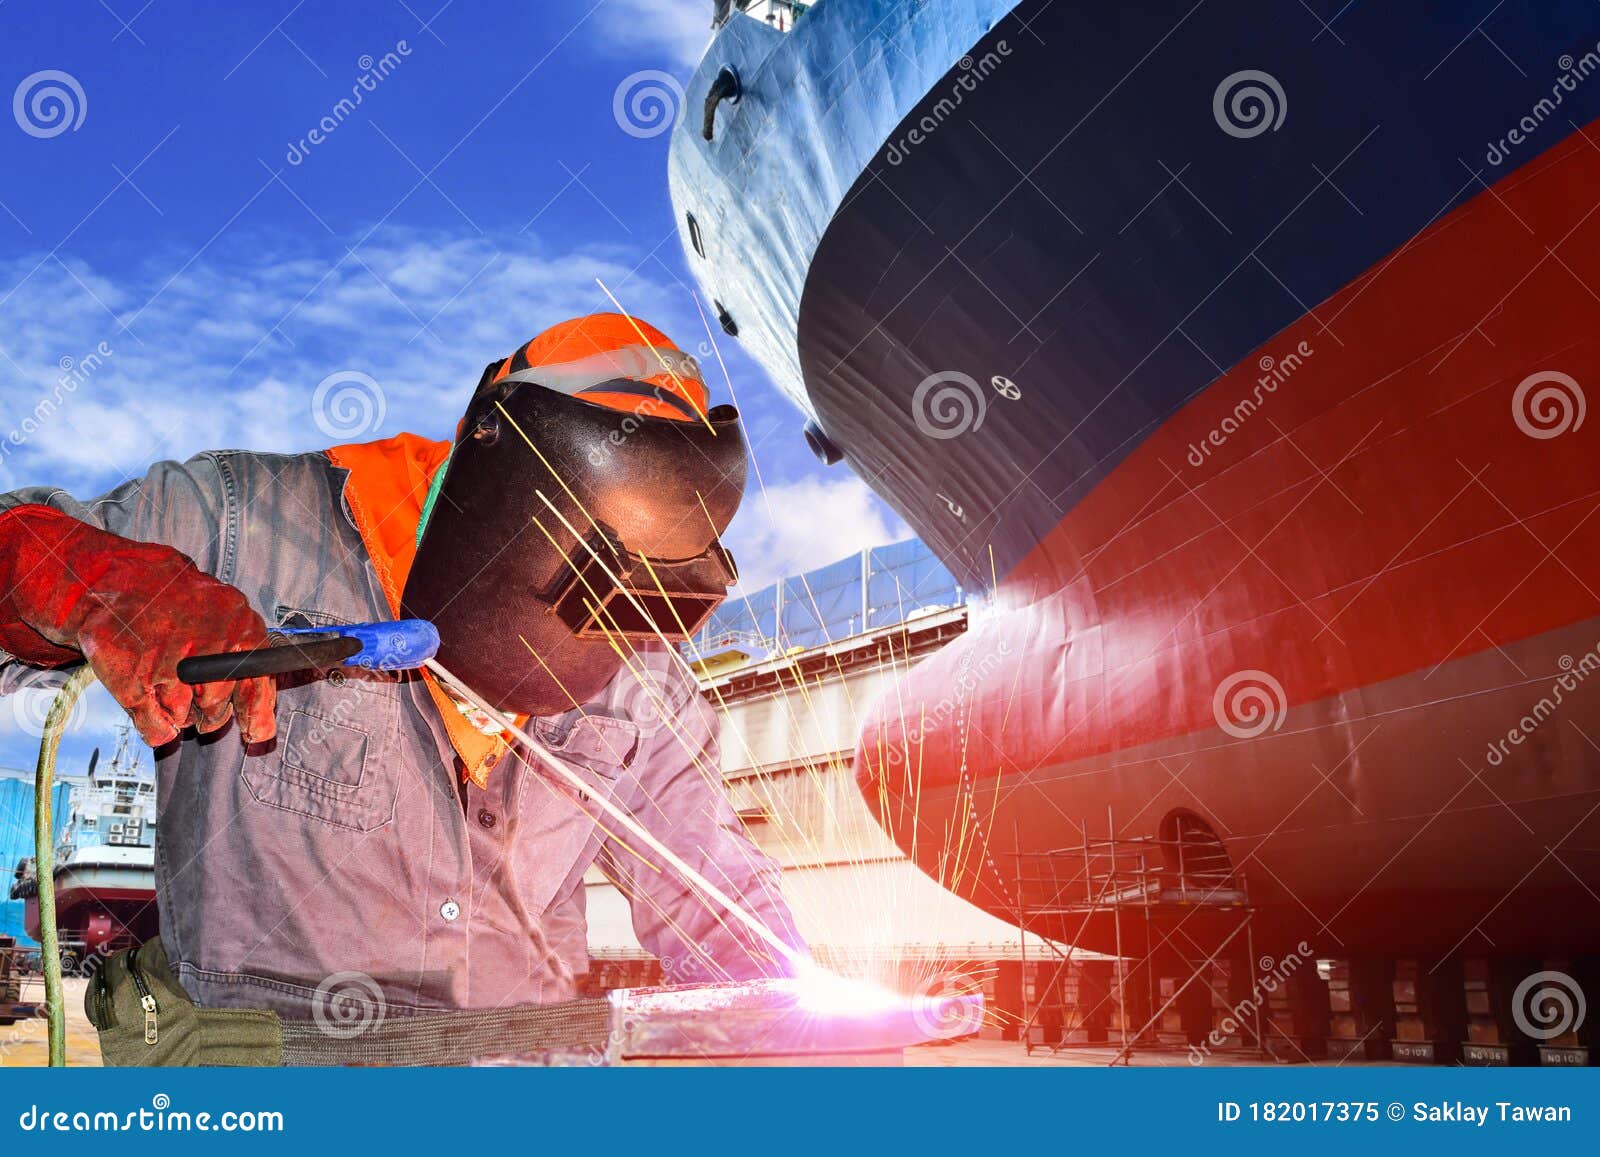 welding ship repair in shipyard thailand.